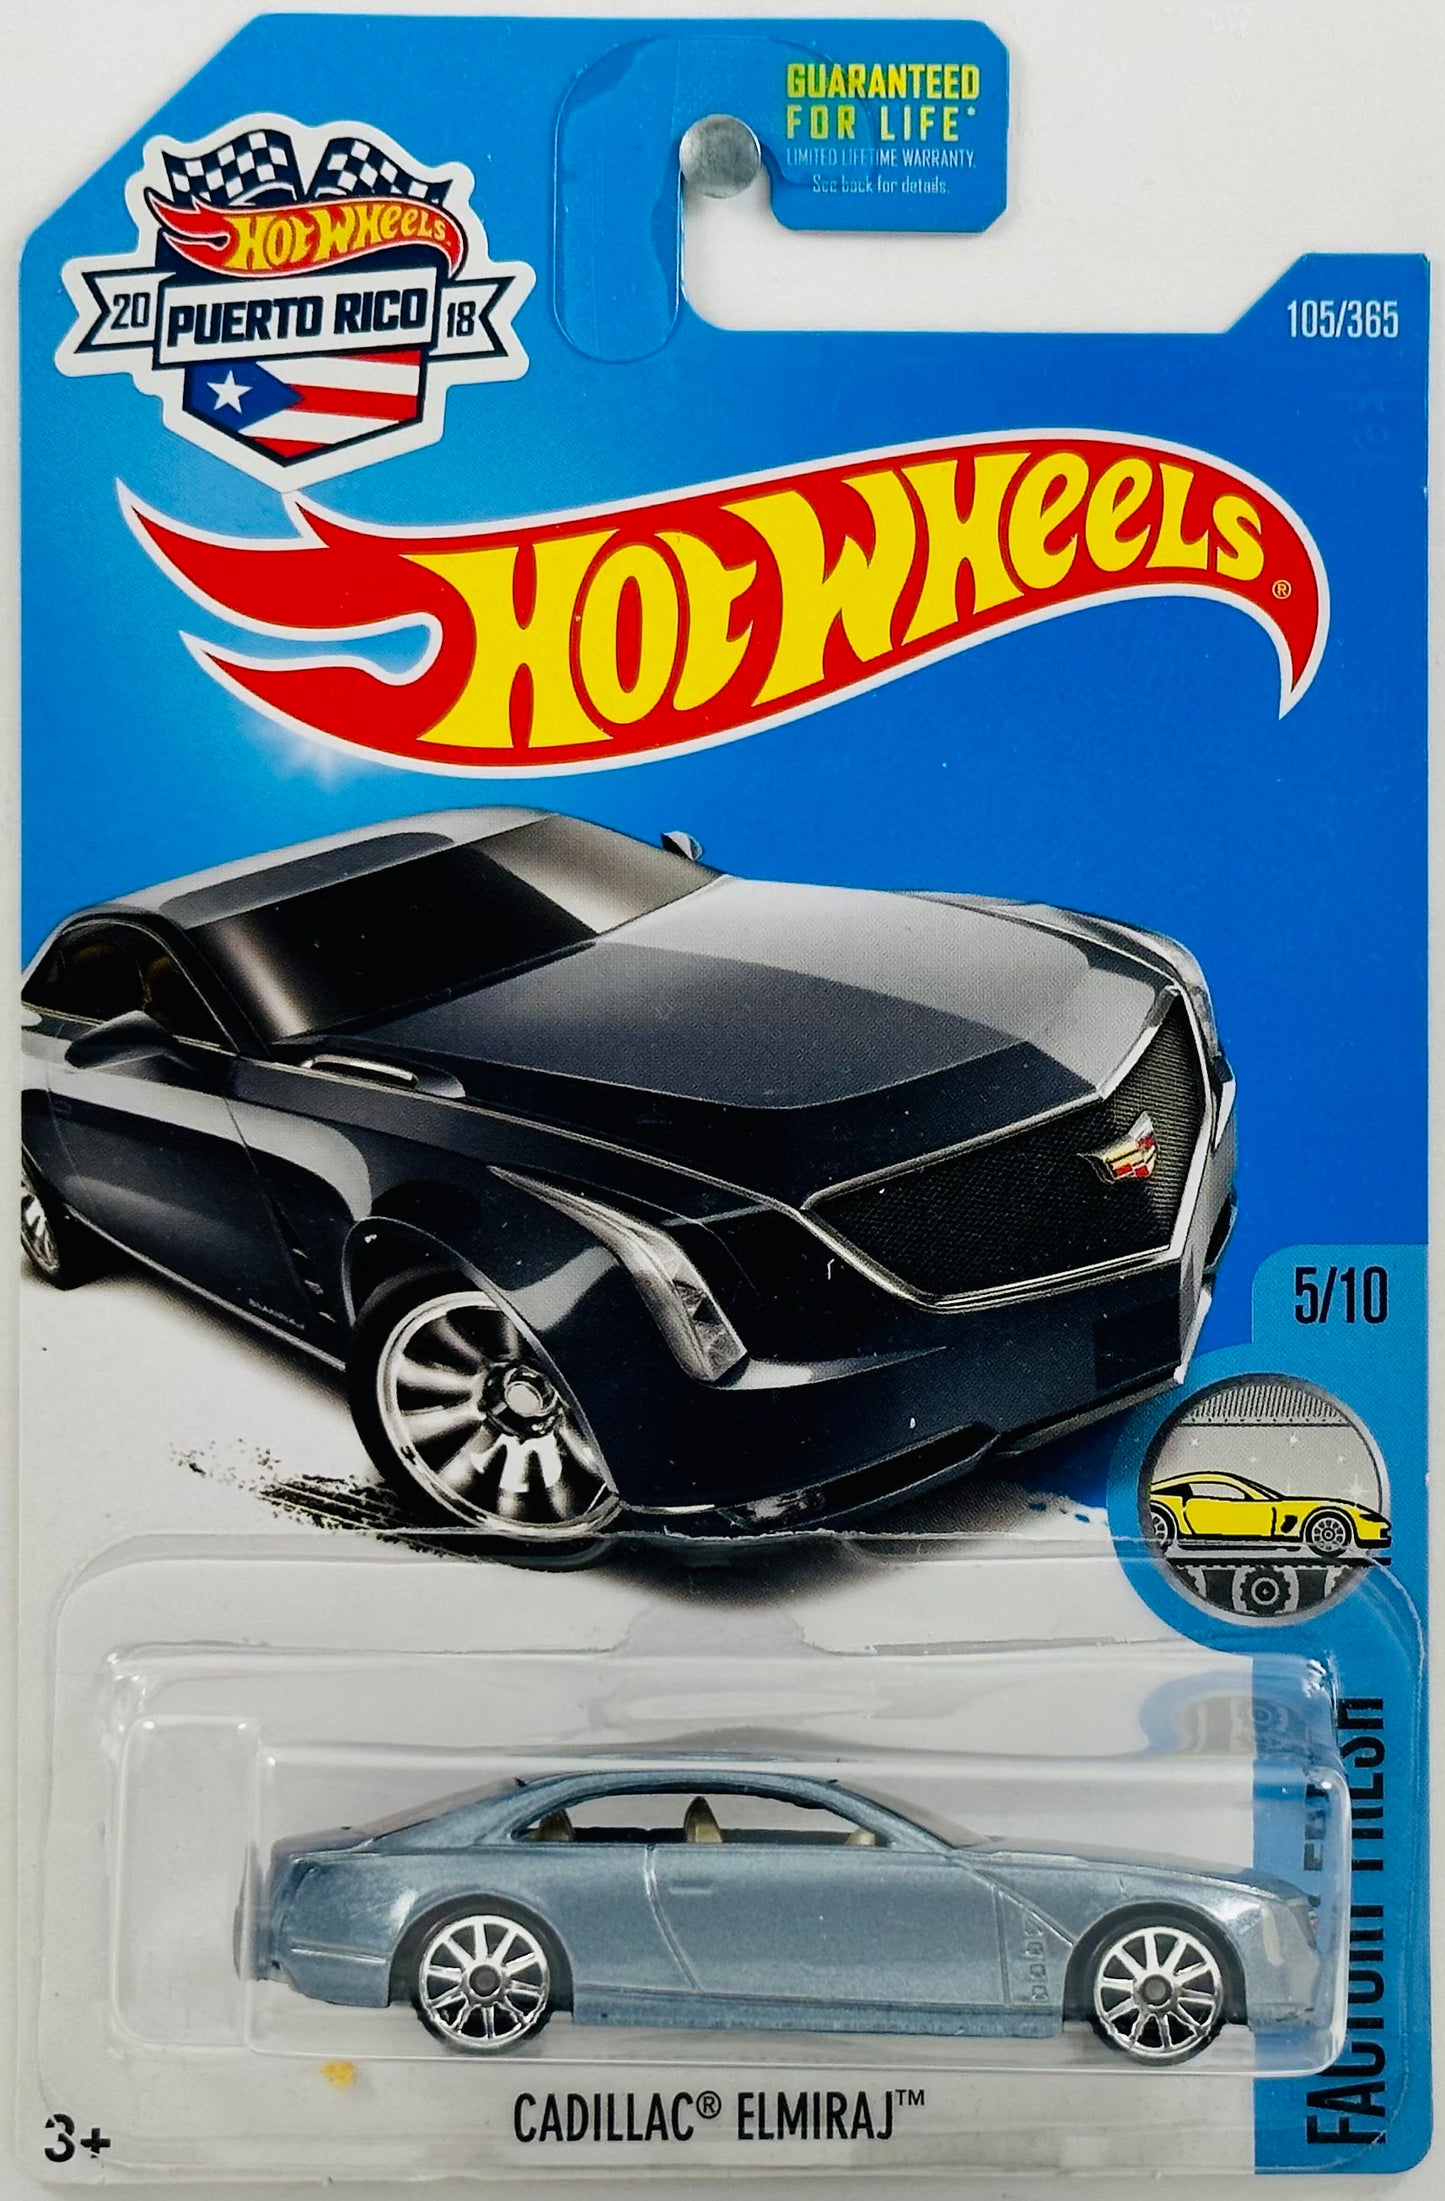 Hot Wheels 2017 - Collector # 105/365 - Factory Fresh 05/10 - Cadillac Elmiraj - Steel Blue - 10 Spoke Wheels - Walmart Exclusive / Puerto Rico Sticker / USA